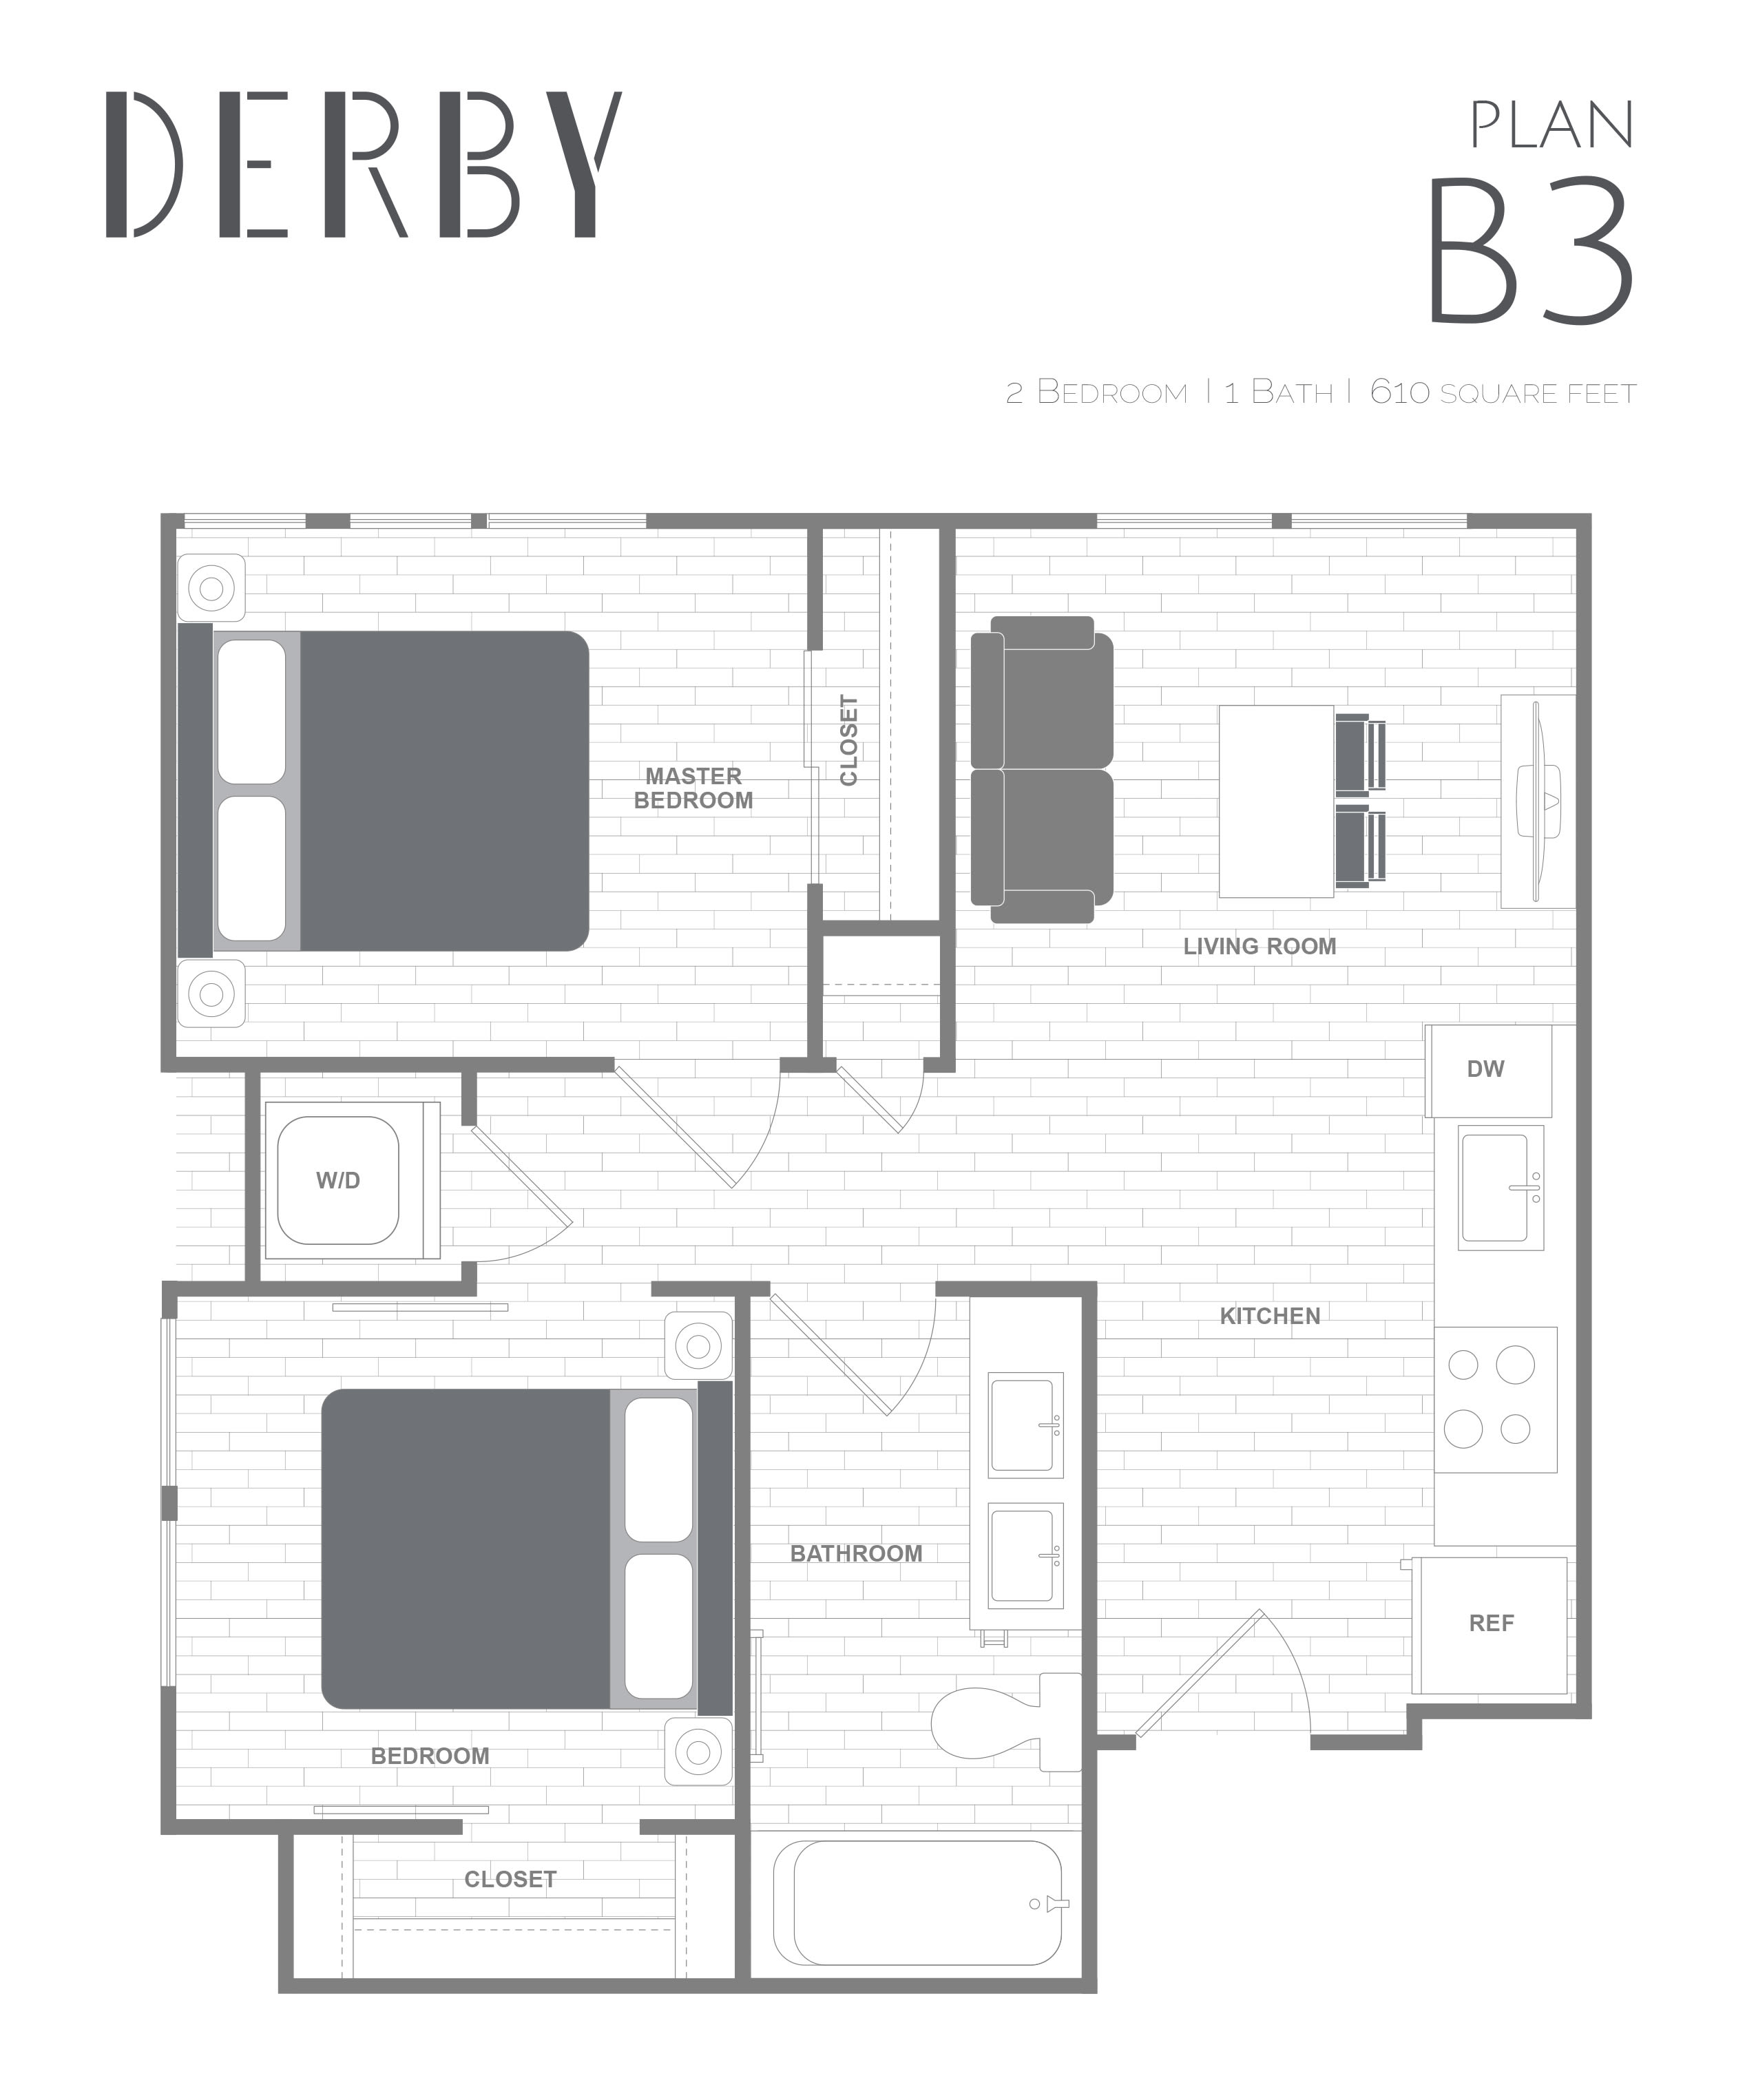 B3 floor plan